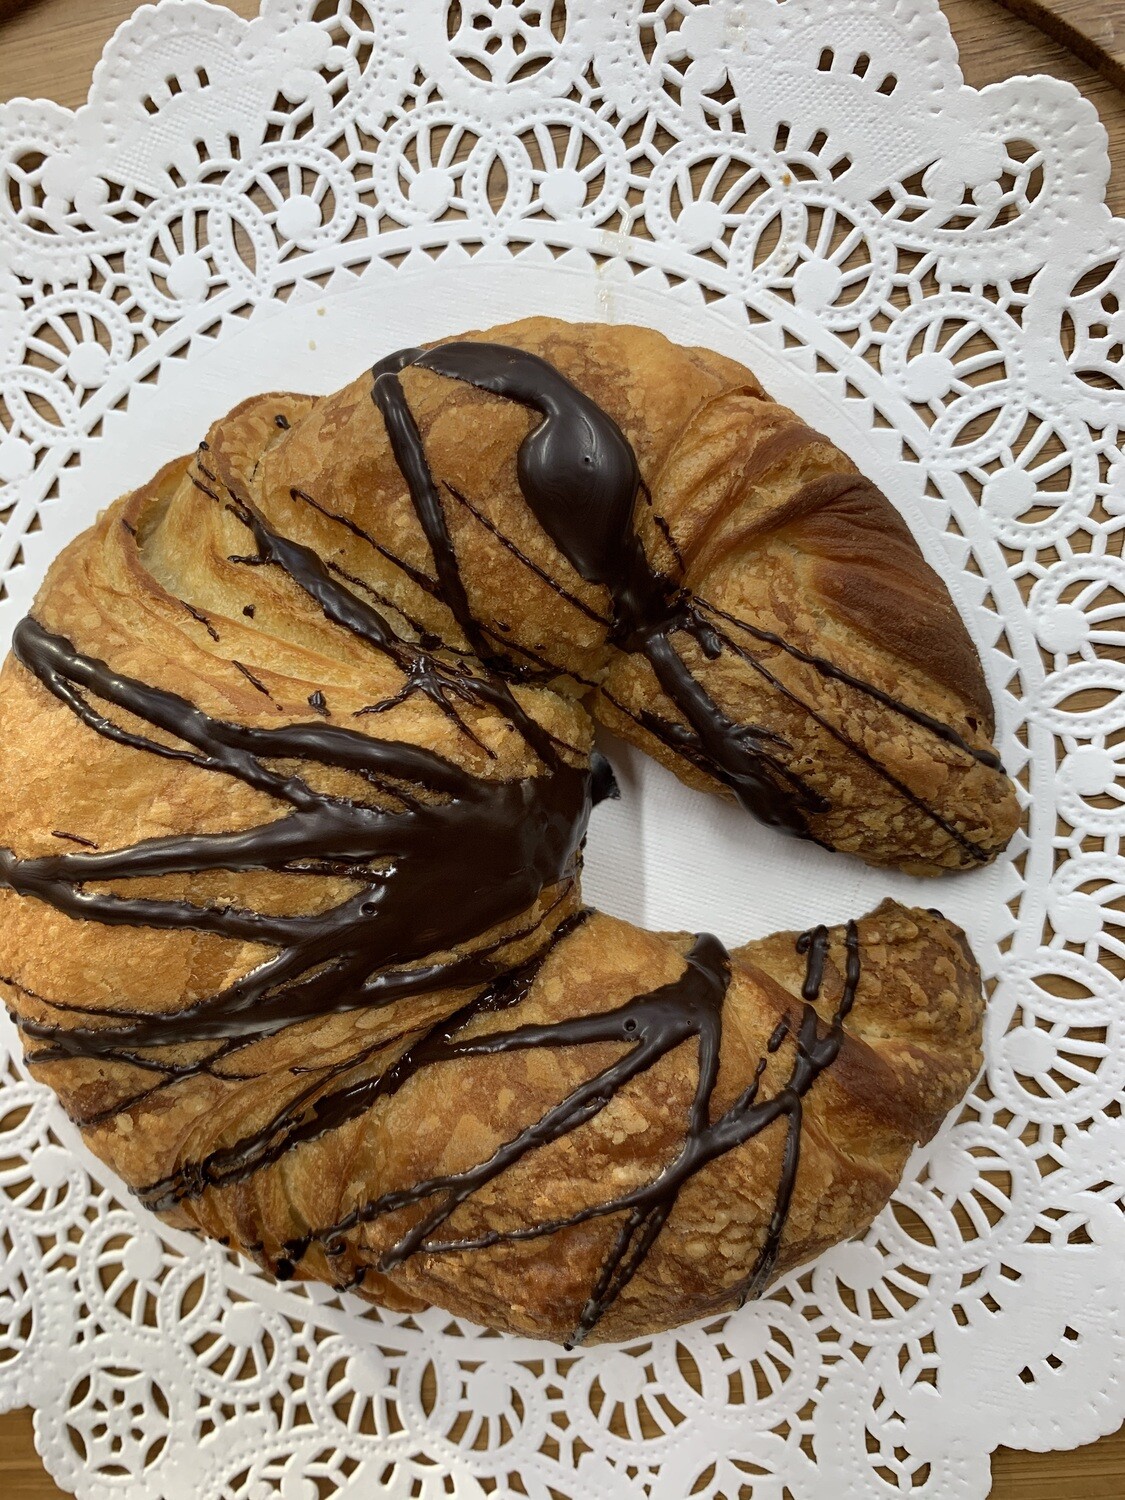 Chocolate Hazelnut Croissant